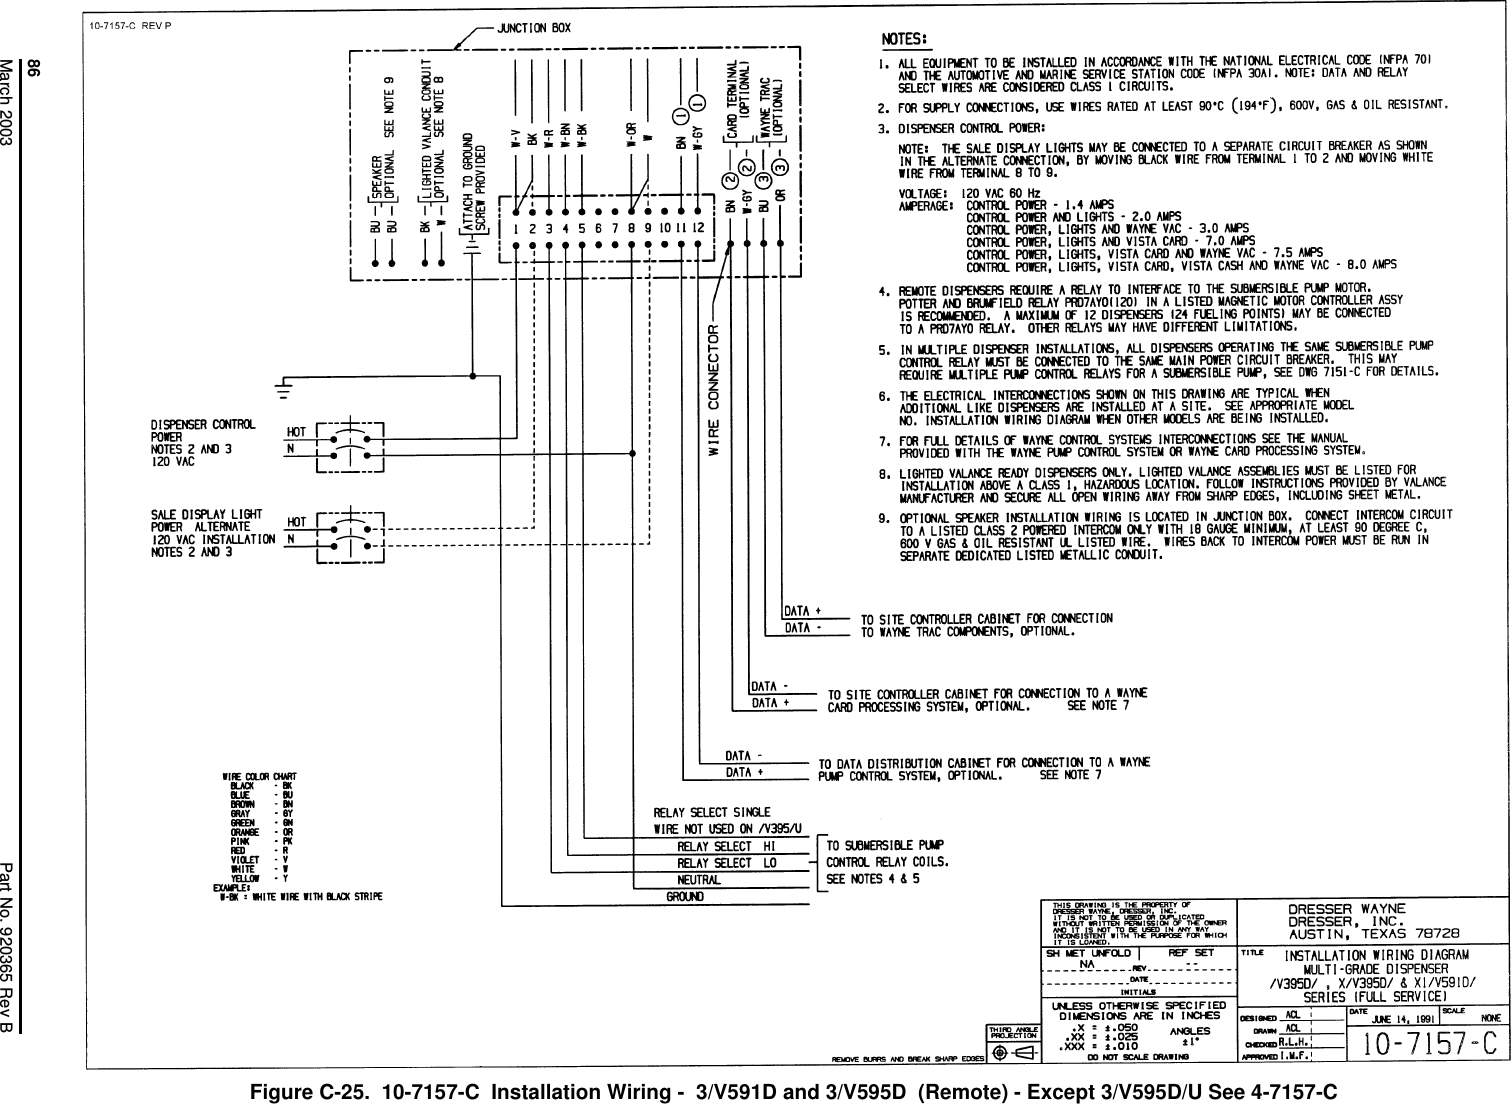 86March 2003 Part No. 920365 Rev BFigure C-25.  10-7157-C  Installation Wiring -  3/V591D and 3/V595D  (Remote) - Except 3/V595D/U See 4-7157-C